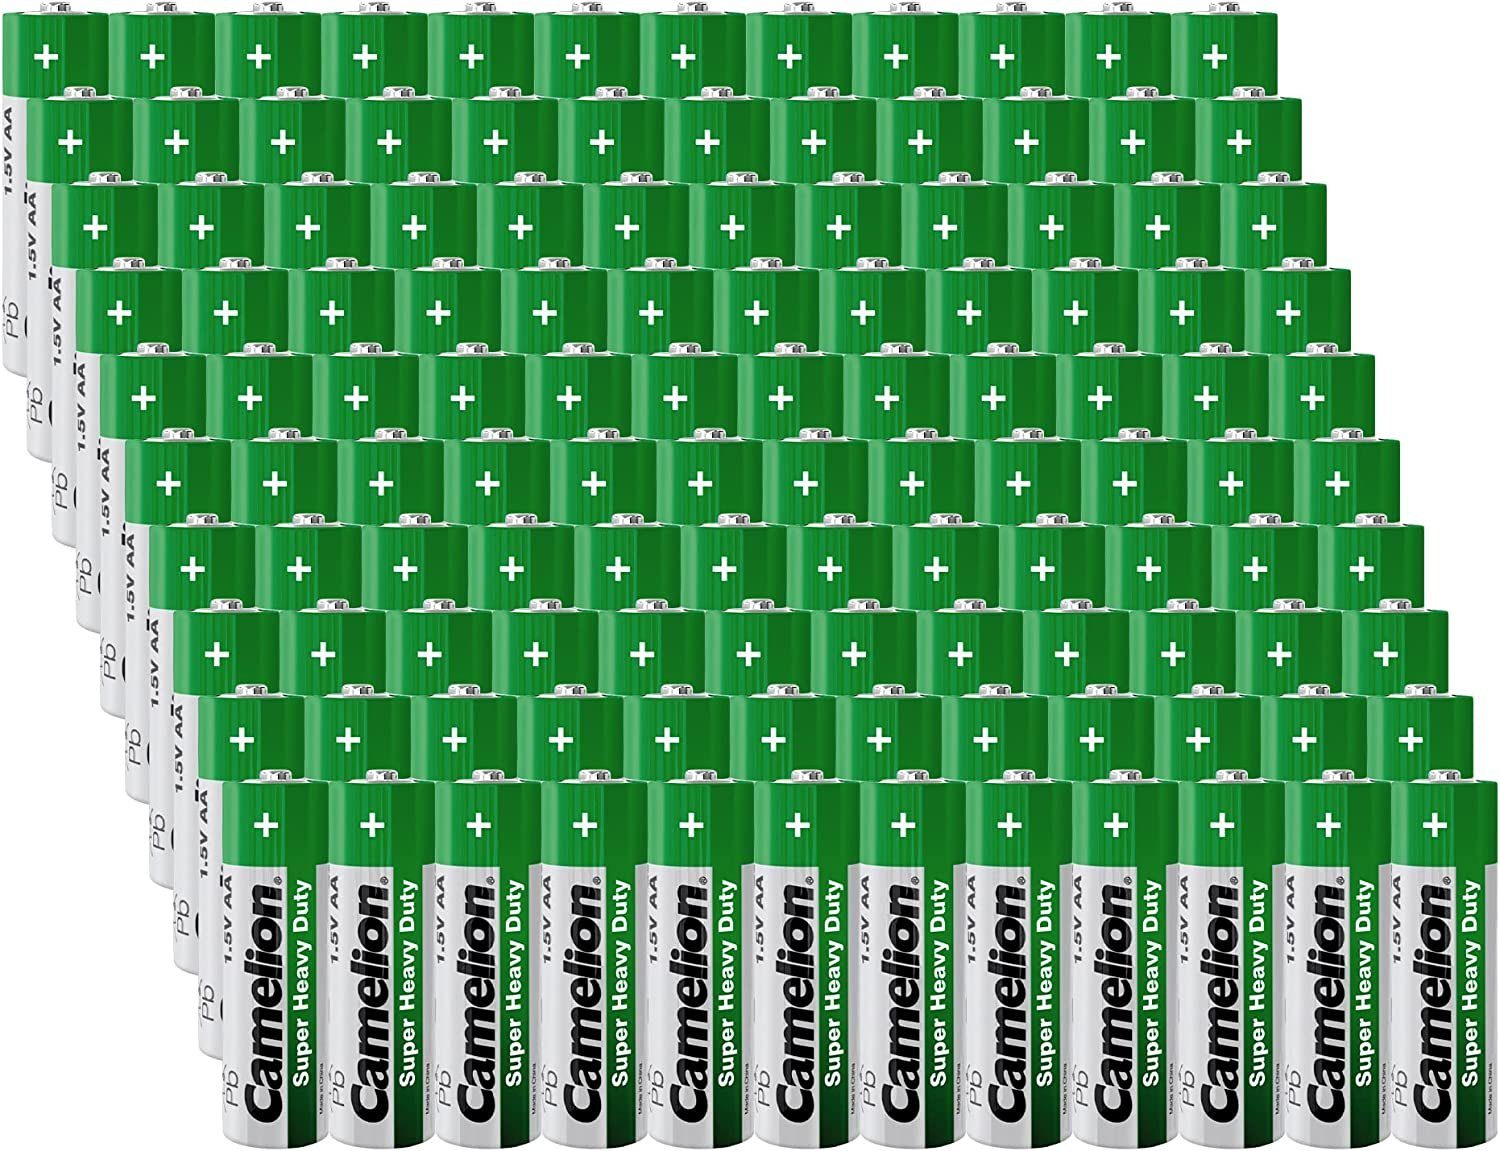 Camelion 120 x AAA Super Heavy Duty 1.5V Leistungsstarke Einwegbatterien Batterie, (1,50 V, 120 St), 120 Stück im Paket